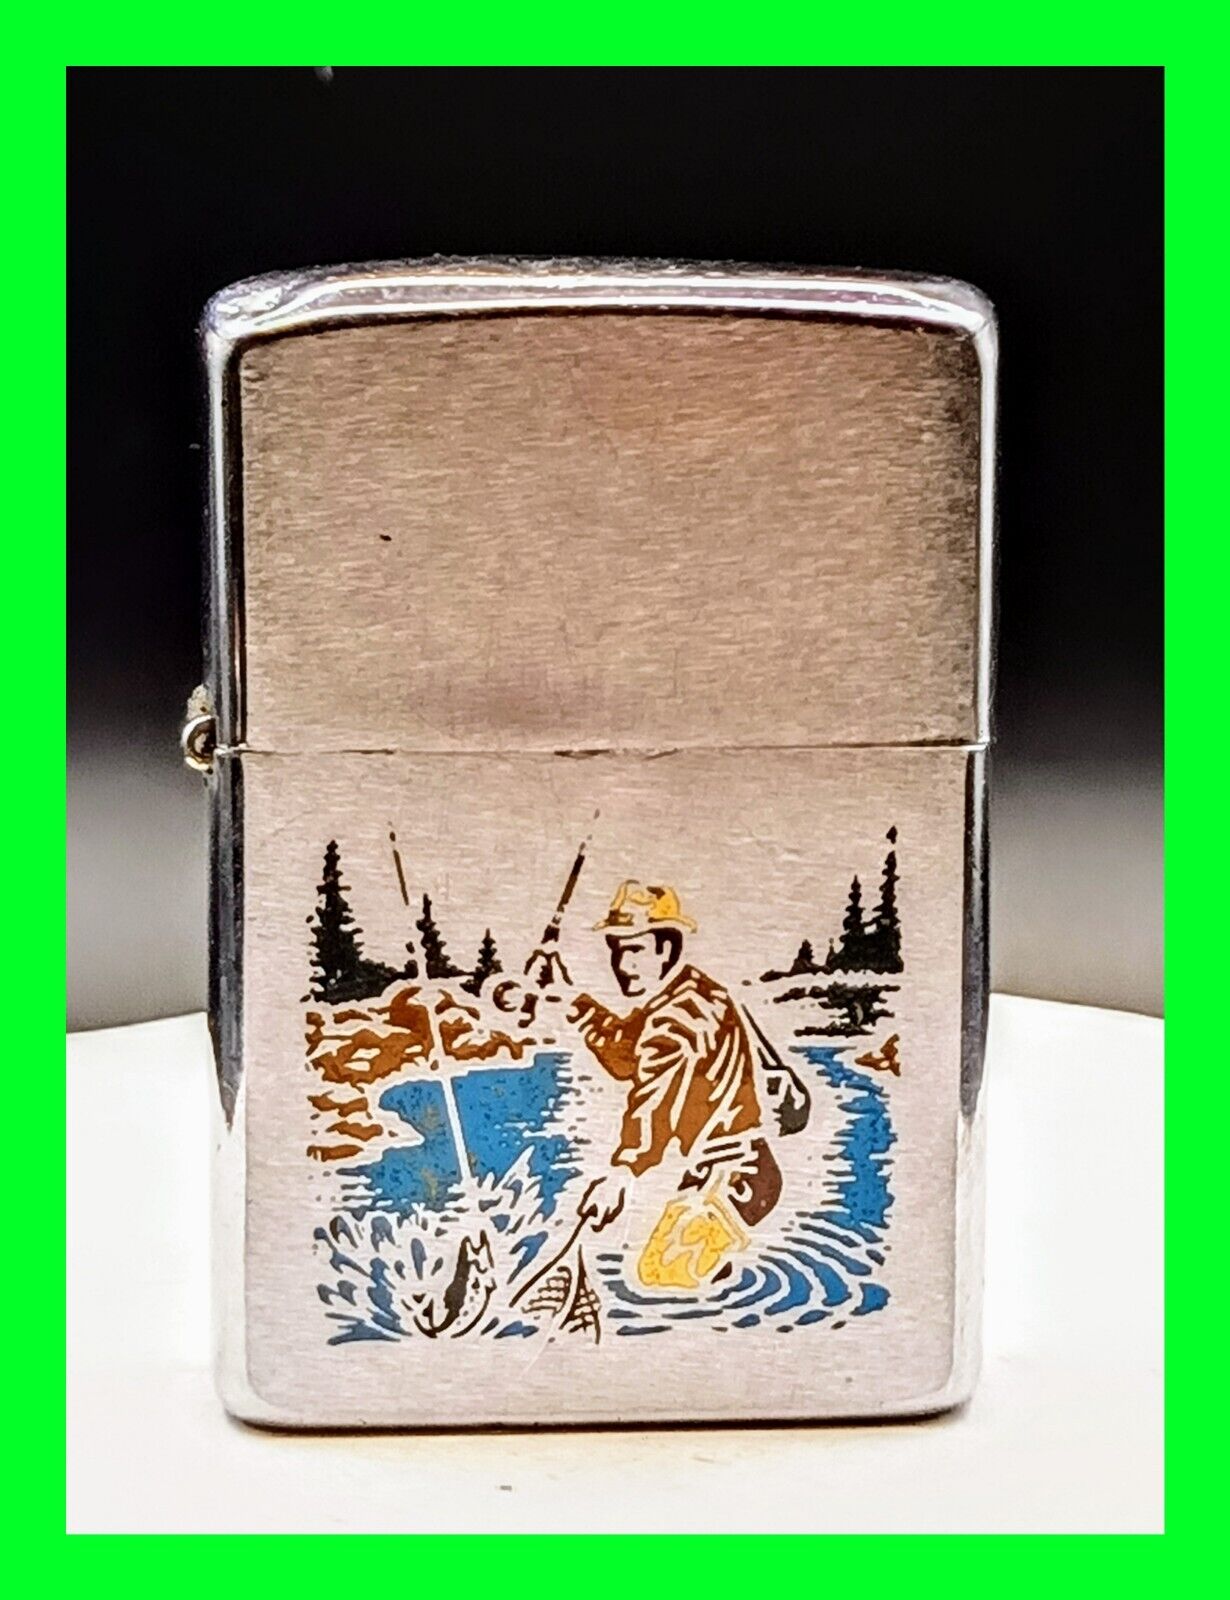 Vintage 1973 Fisherman Zippo Lighter - Correct Original Insert - Working Order 